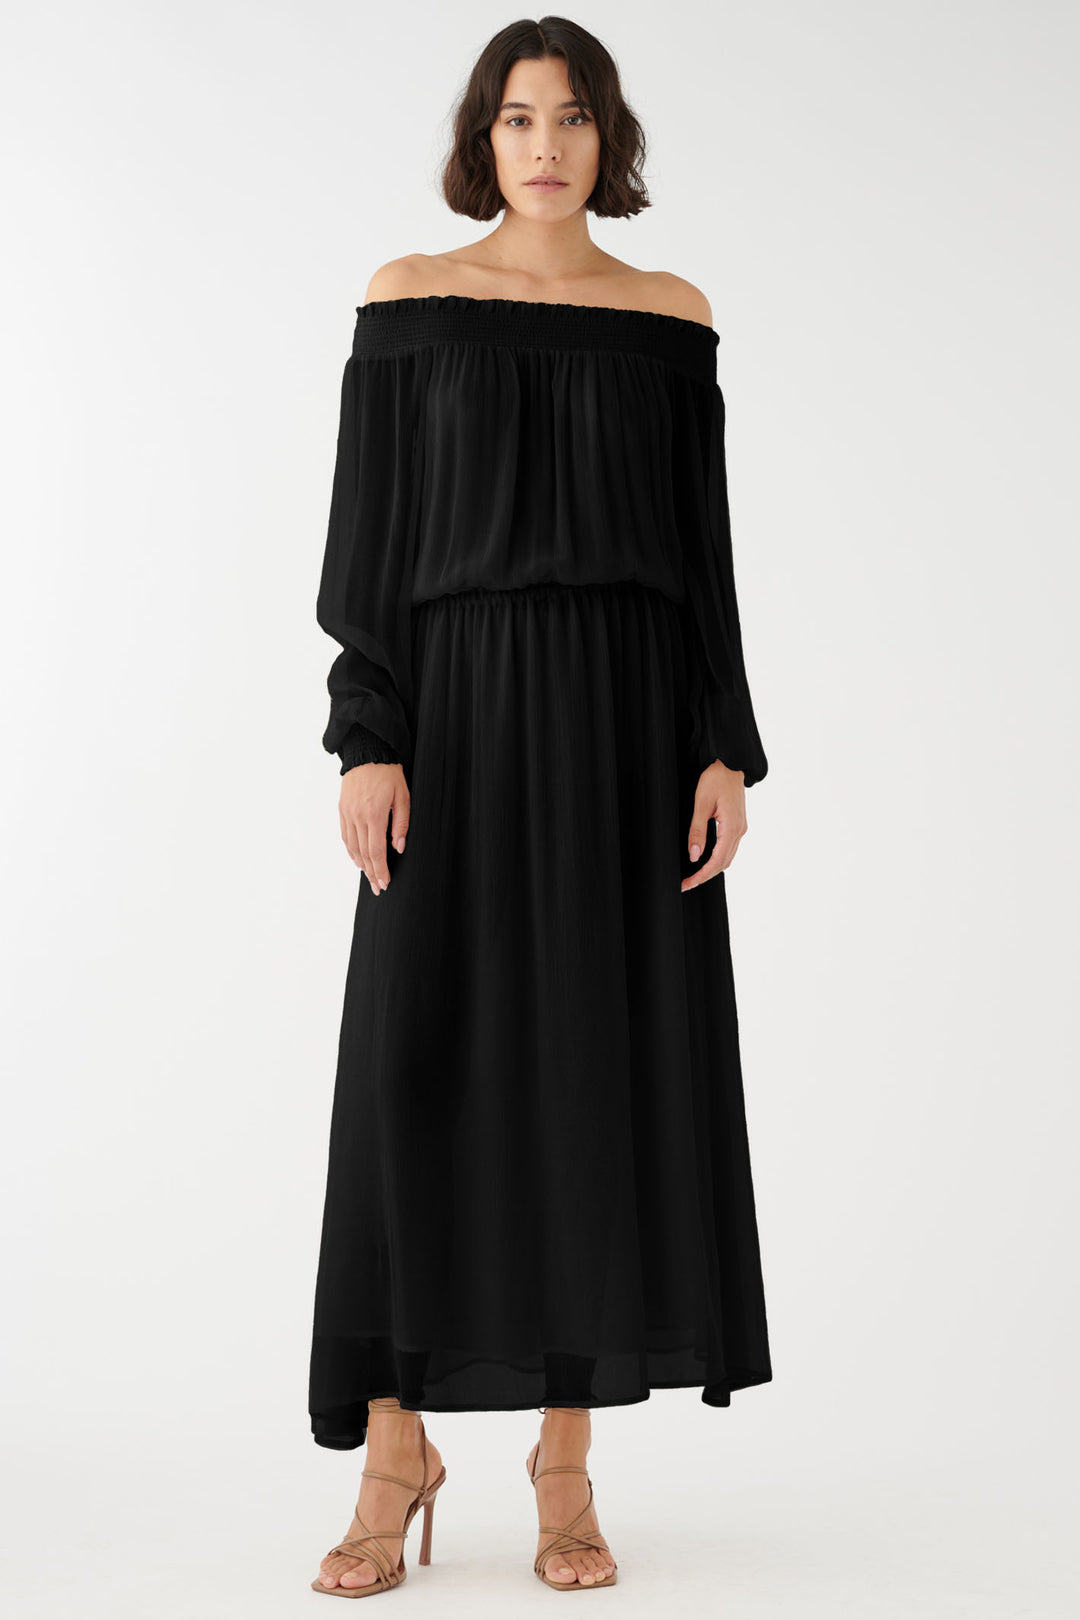 Dea Kudibal Tribelledea 1170424 1000 Black Off The Shoulder Dress - Olivia Grace Fashion